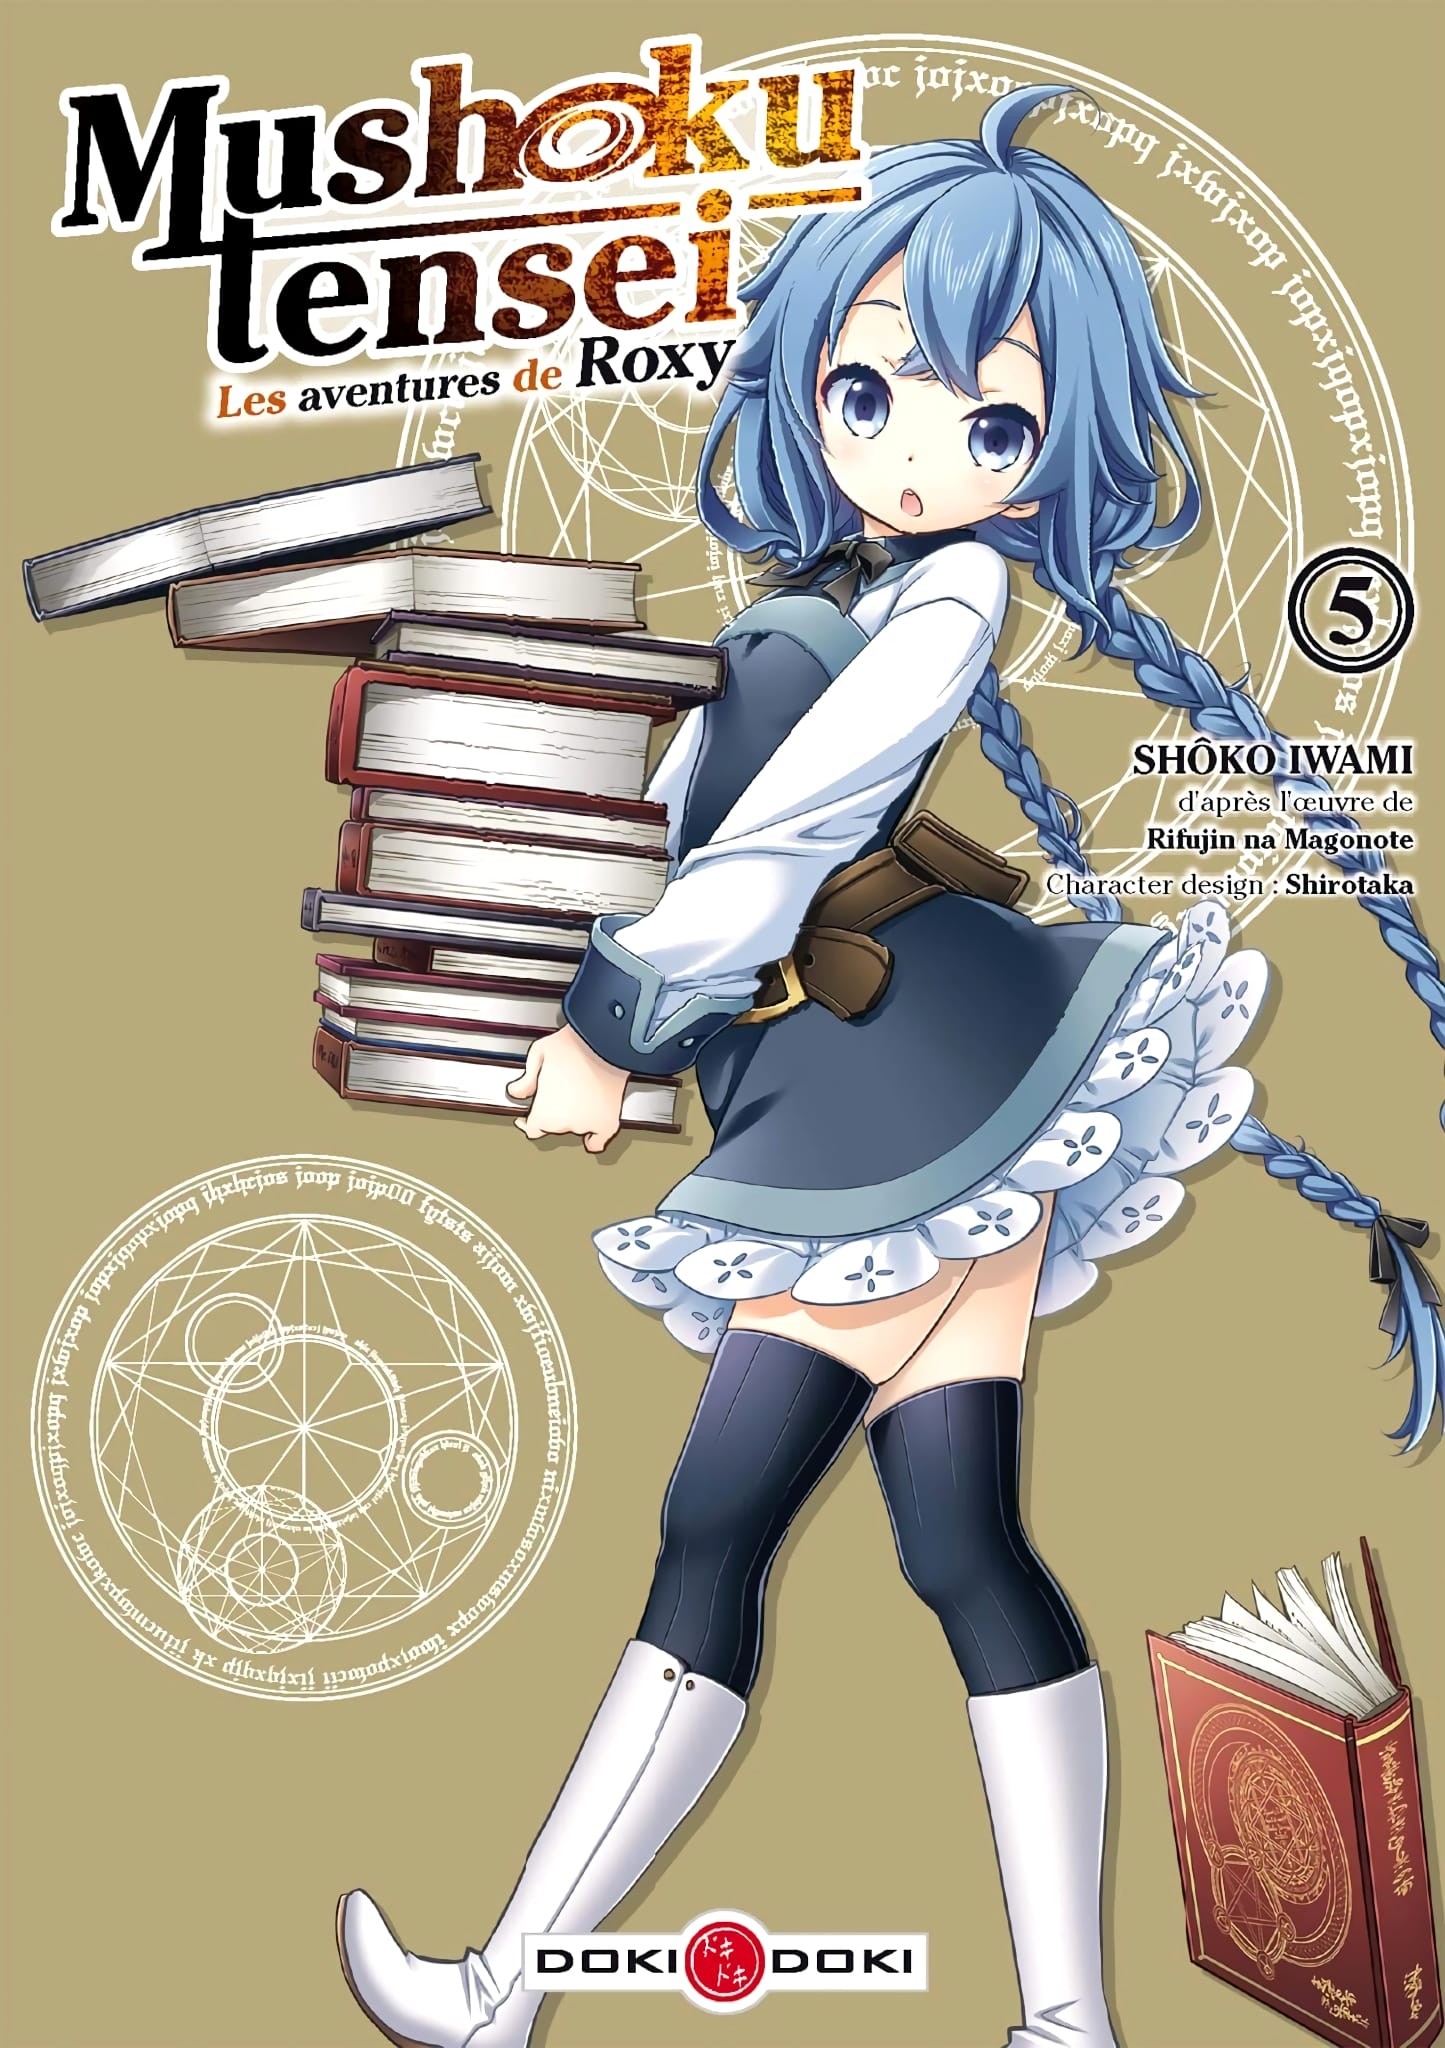 Tome 5 du manga Mushoku Tensei - Les Aventures de Roxy